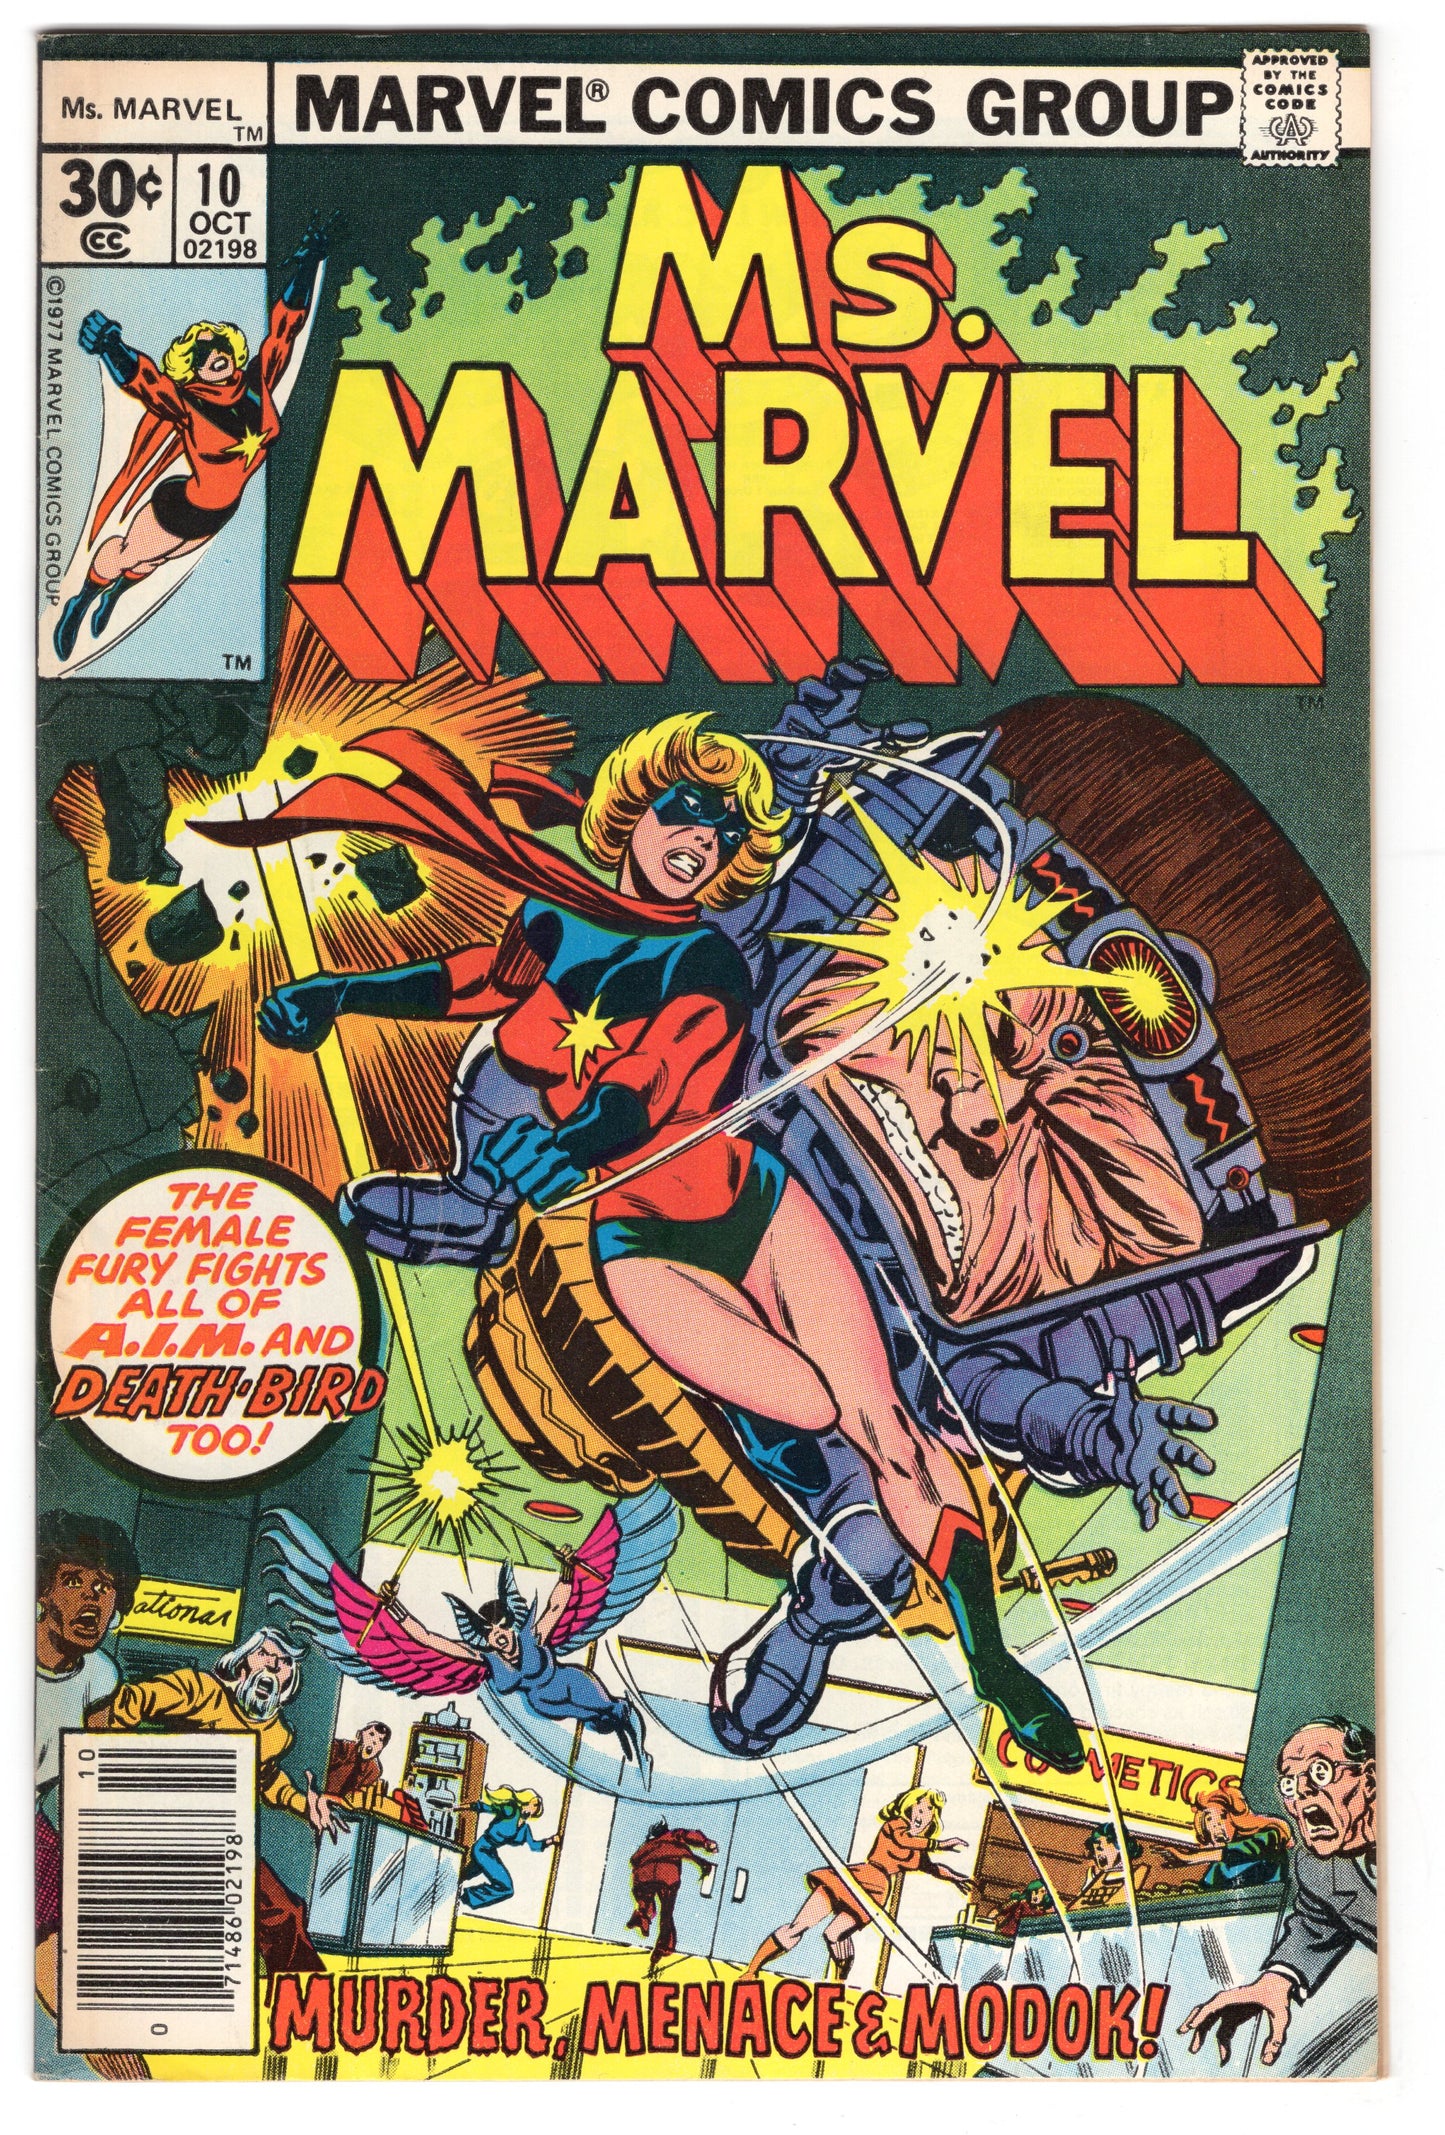 Ms. Marvel - Issue #10 "Murder, Meance & Modok!" (Oct. 1977 - Marvel Comics) FN-